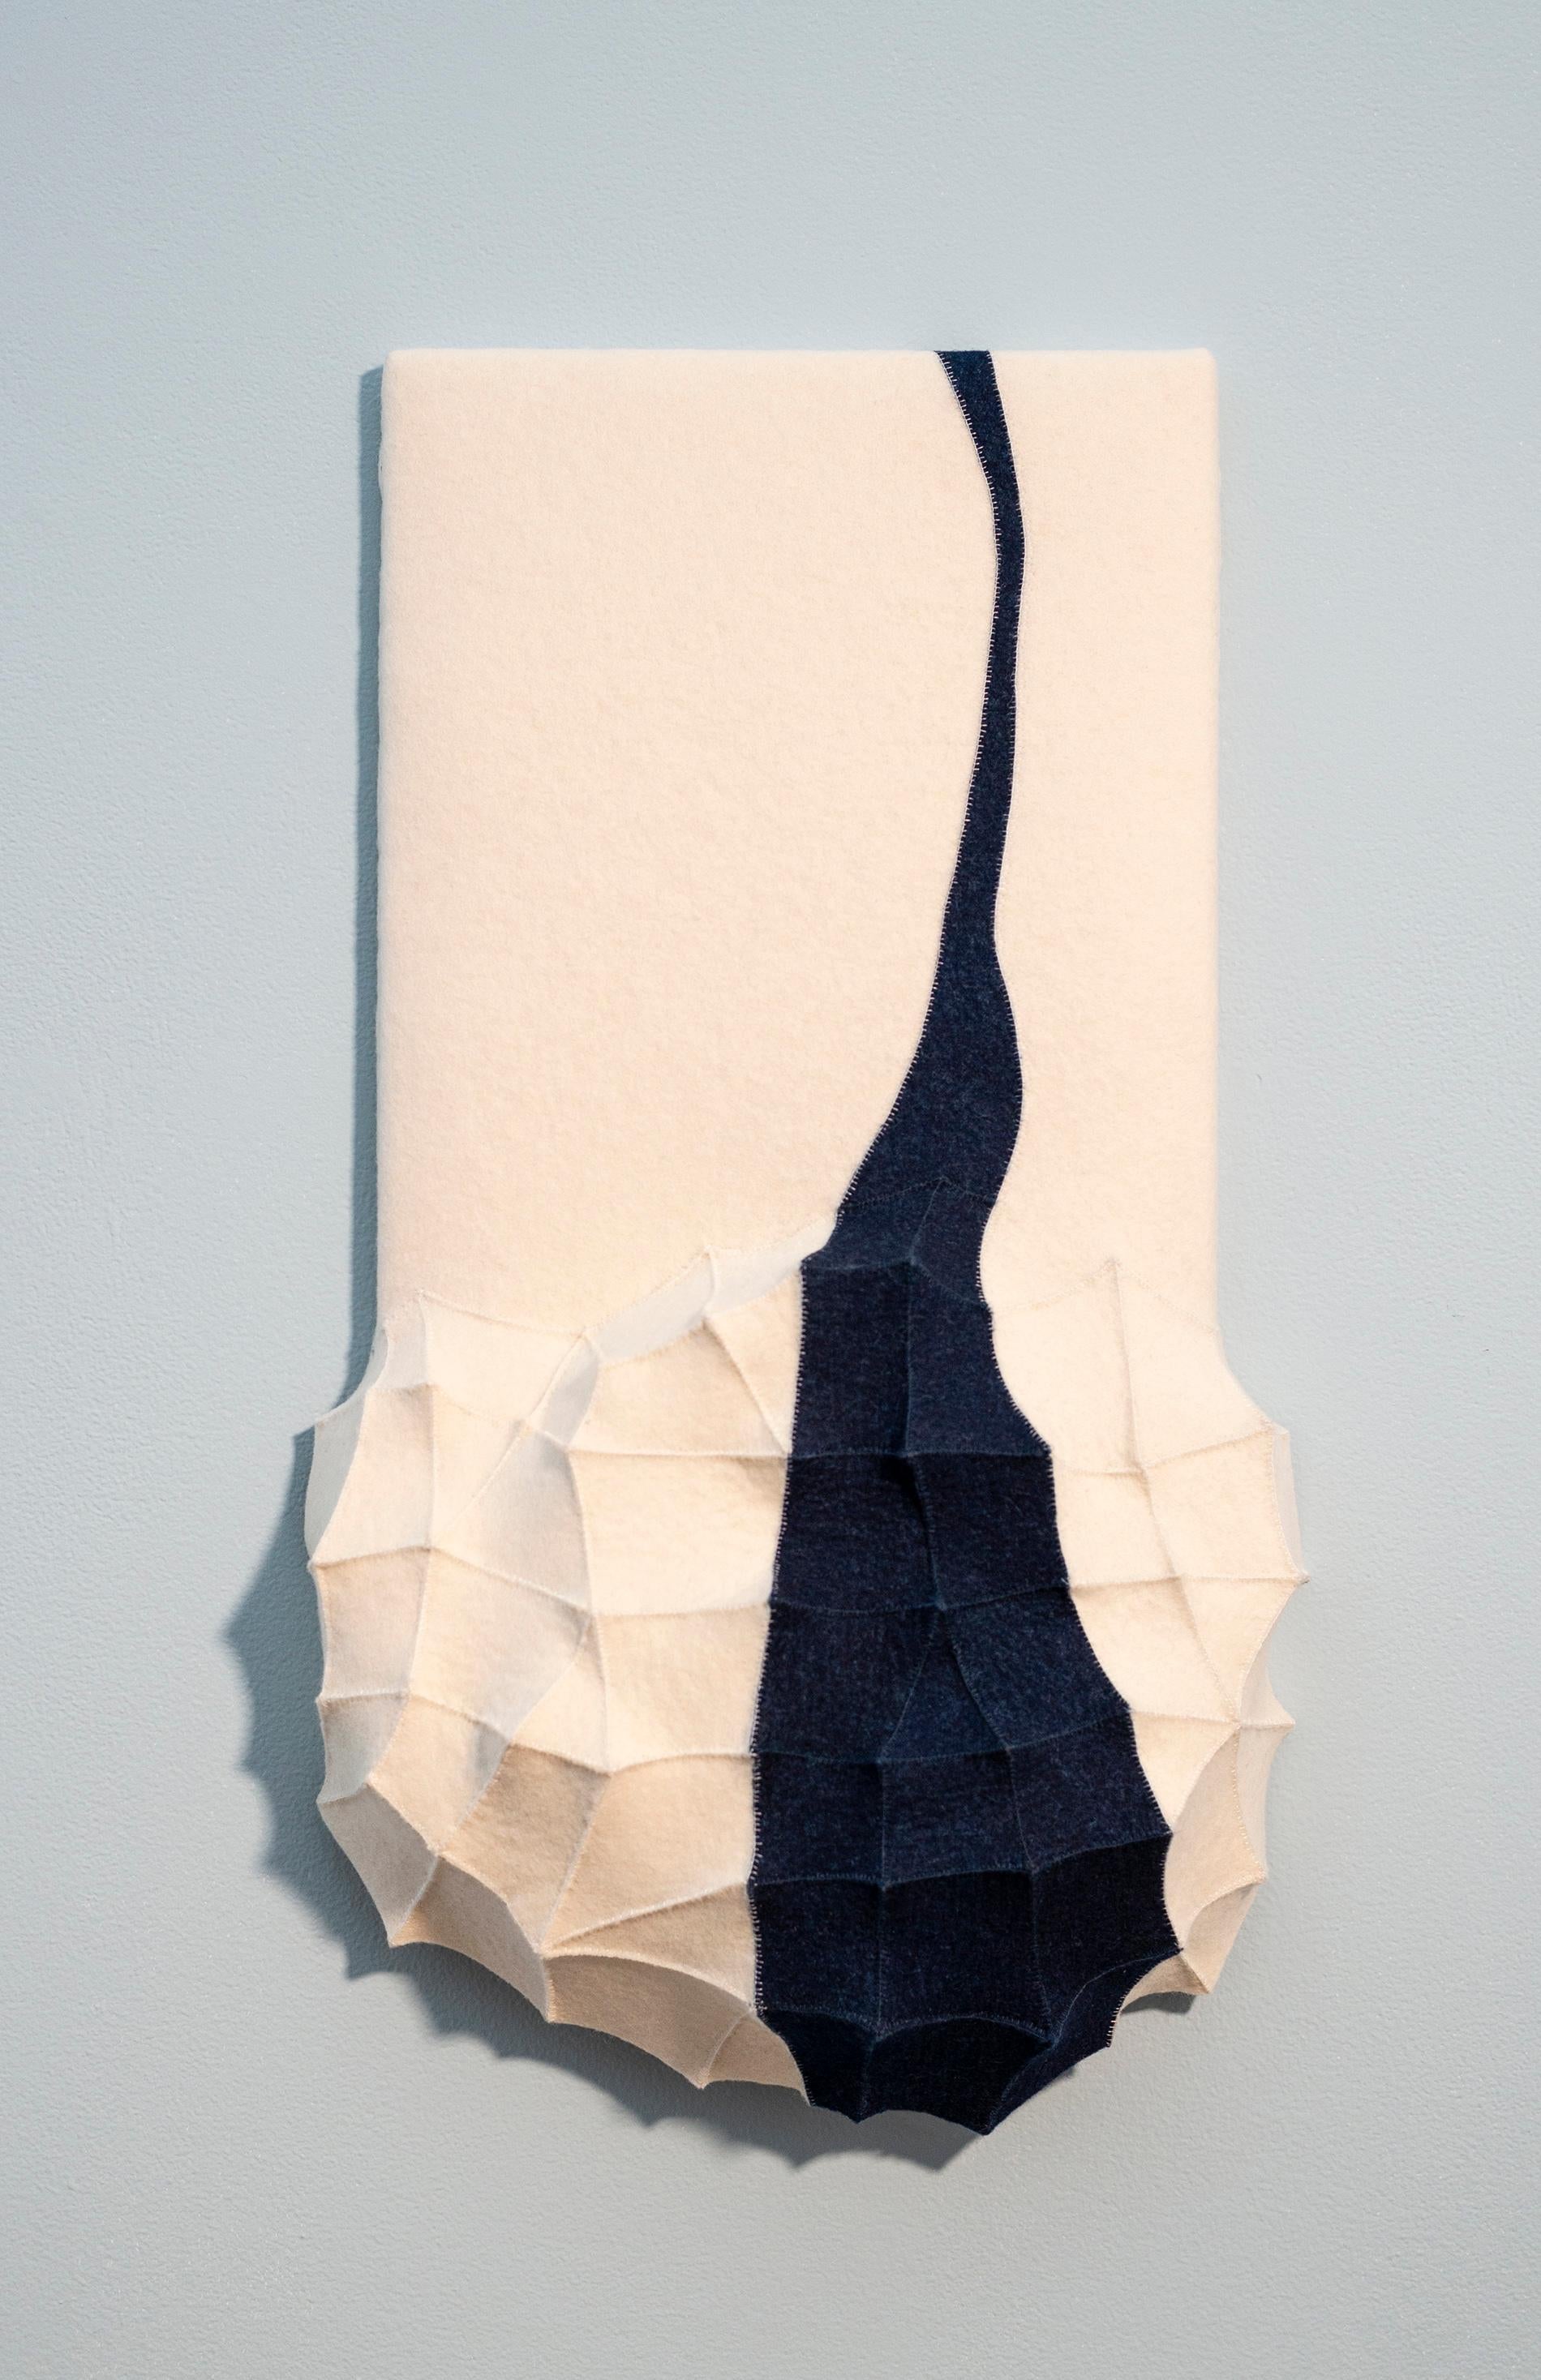 Chung-Im Kim Abstract Sculpture - Sansu 1 - blue, white, 3D, biomorphic, abstract, industrial felt wall sculpture